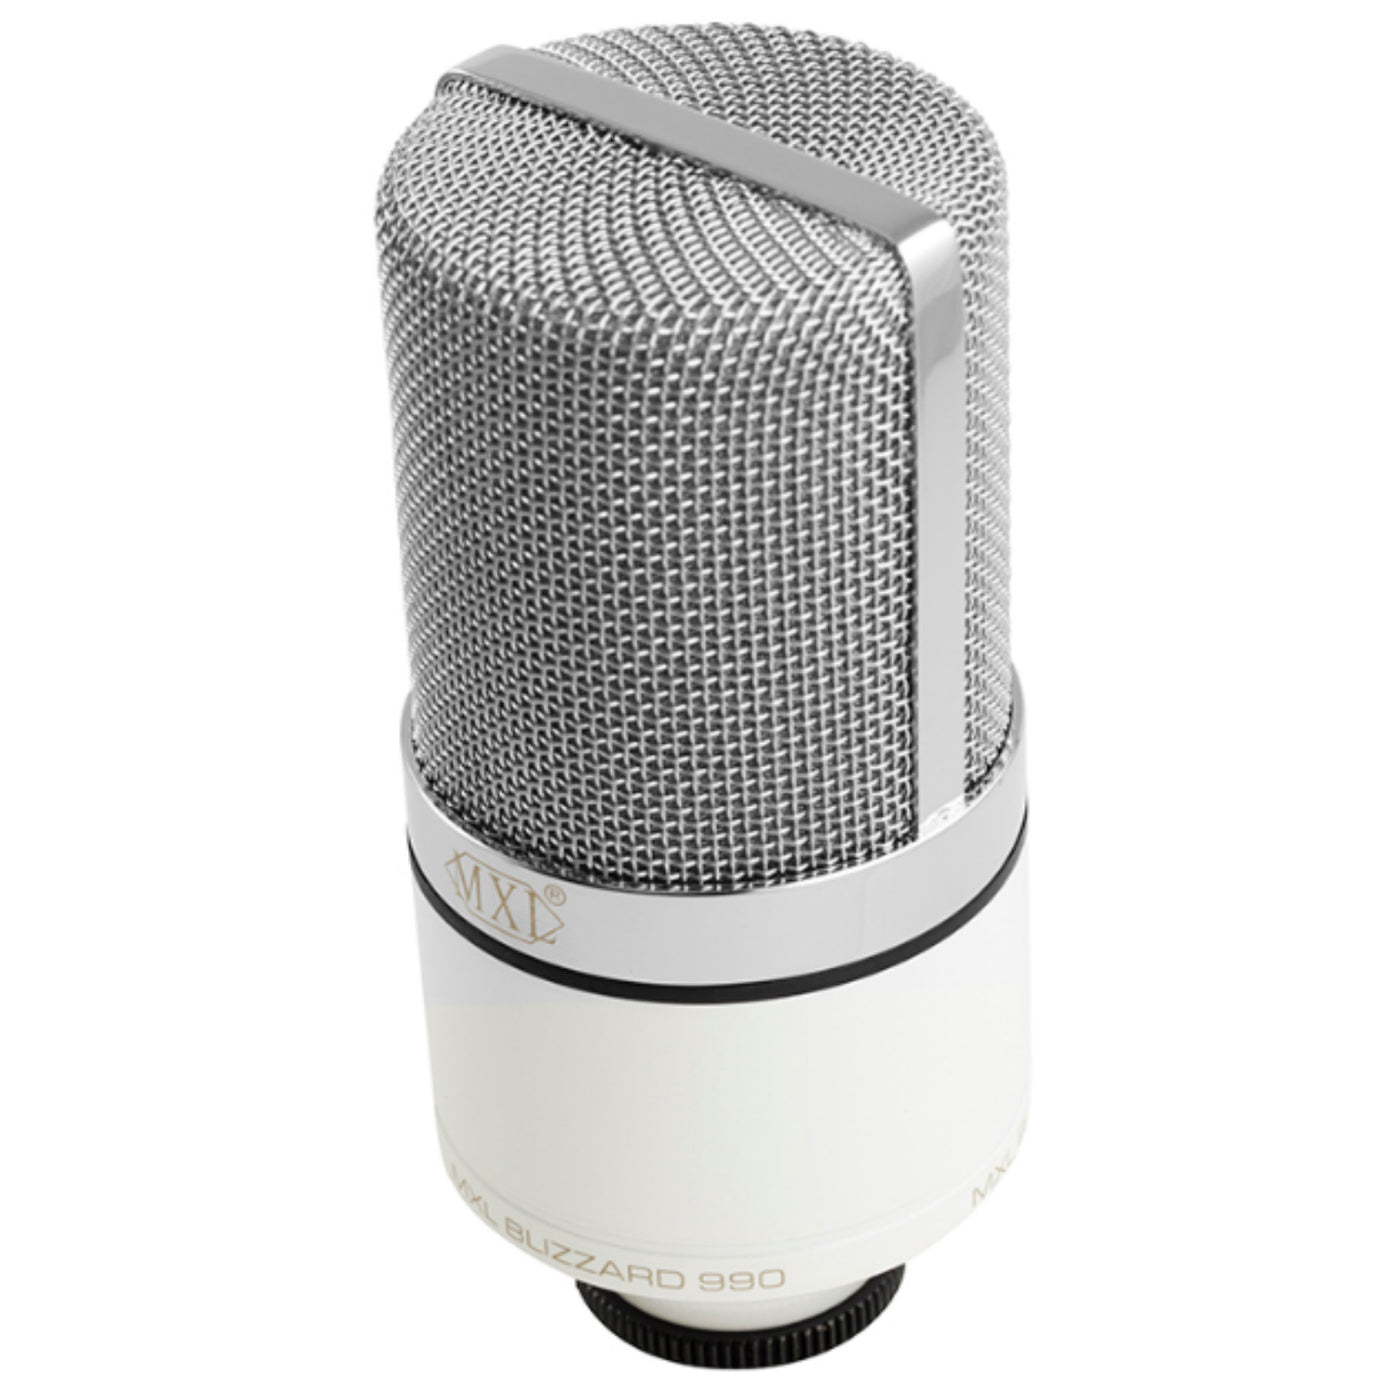 MXL-990 BLIZZARD LED Condenser Microphone